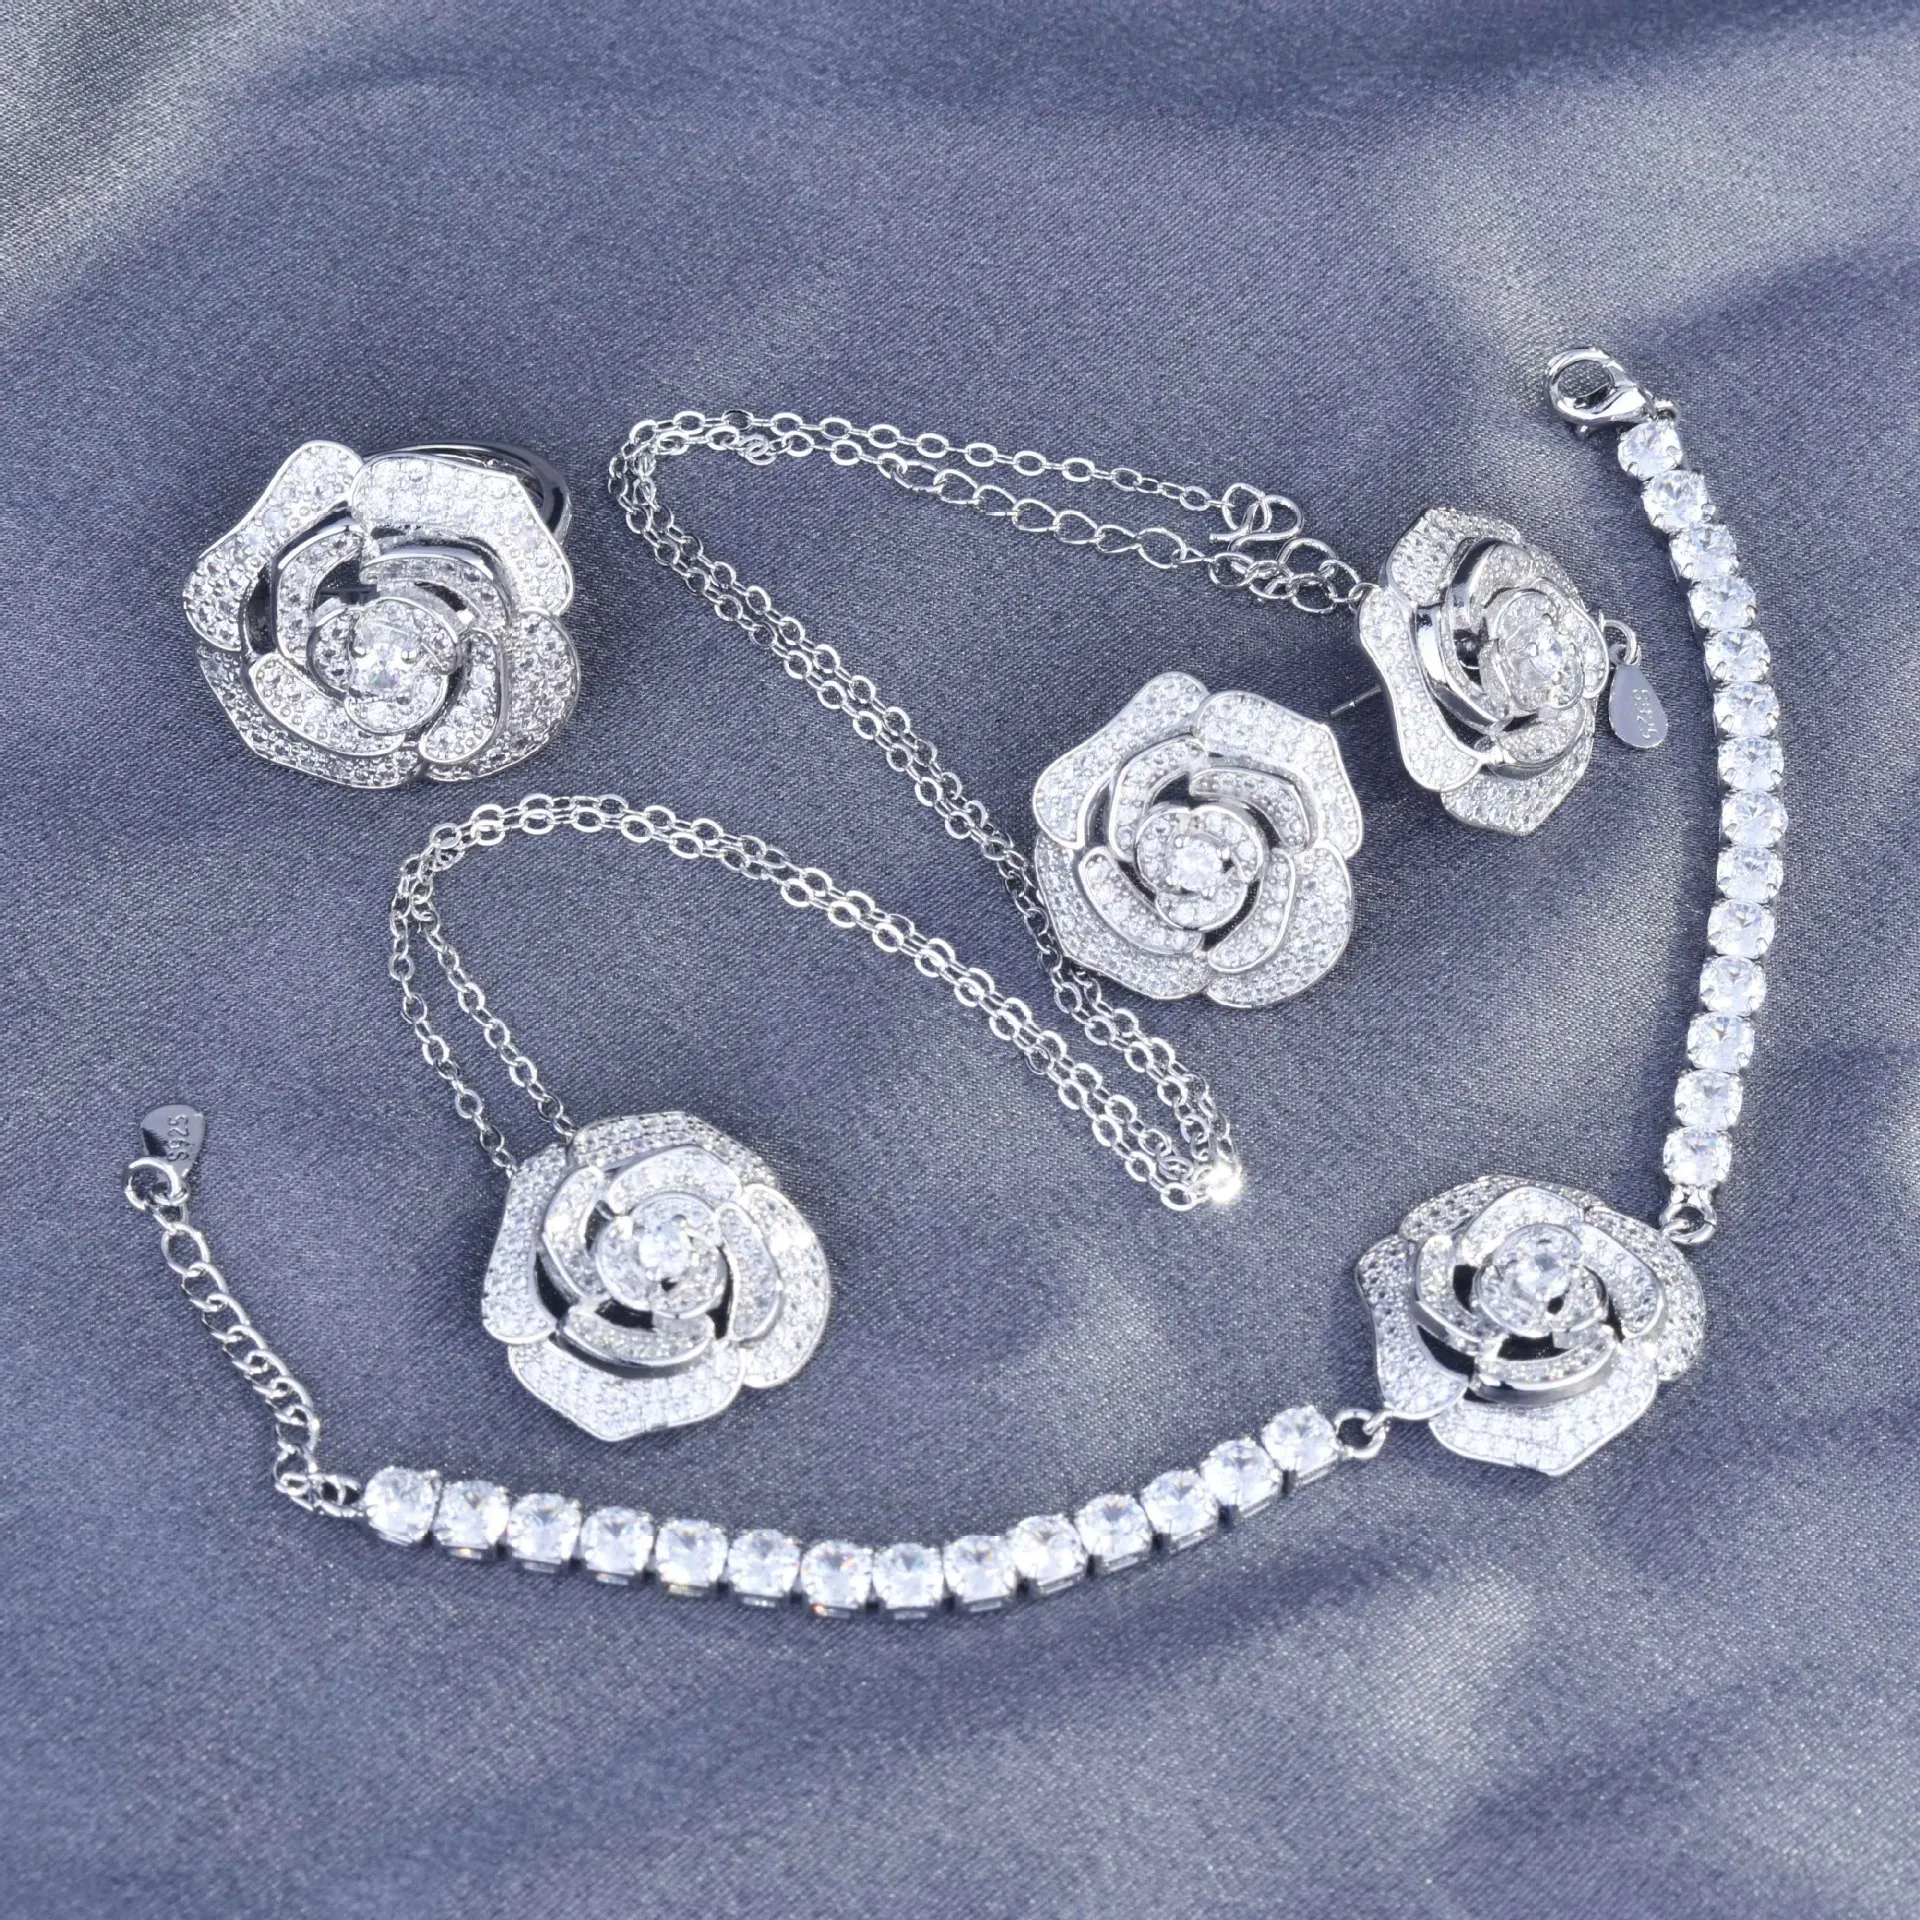 

QTT Brilliant Gorgeous Flower Forever Jewelry Set For Women White Crystal 925 Silver Necklace Earrings Ring Bracelet Sets 2021